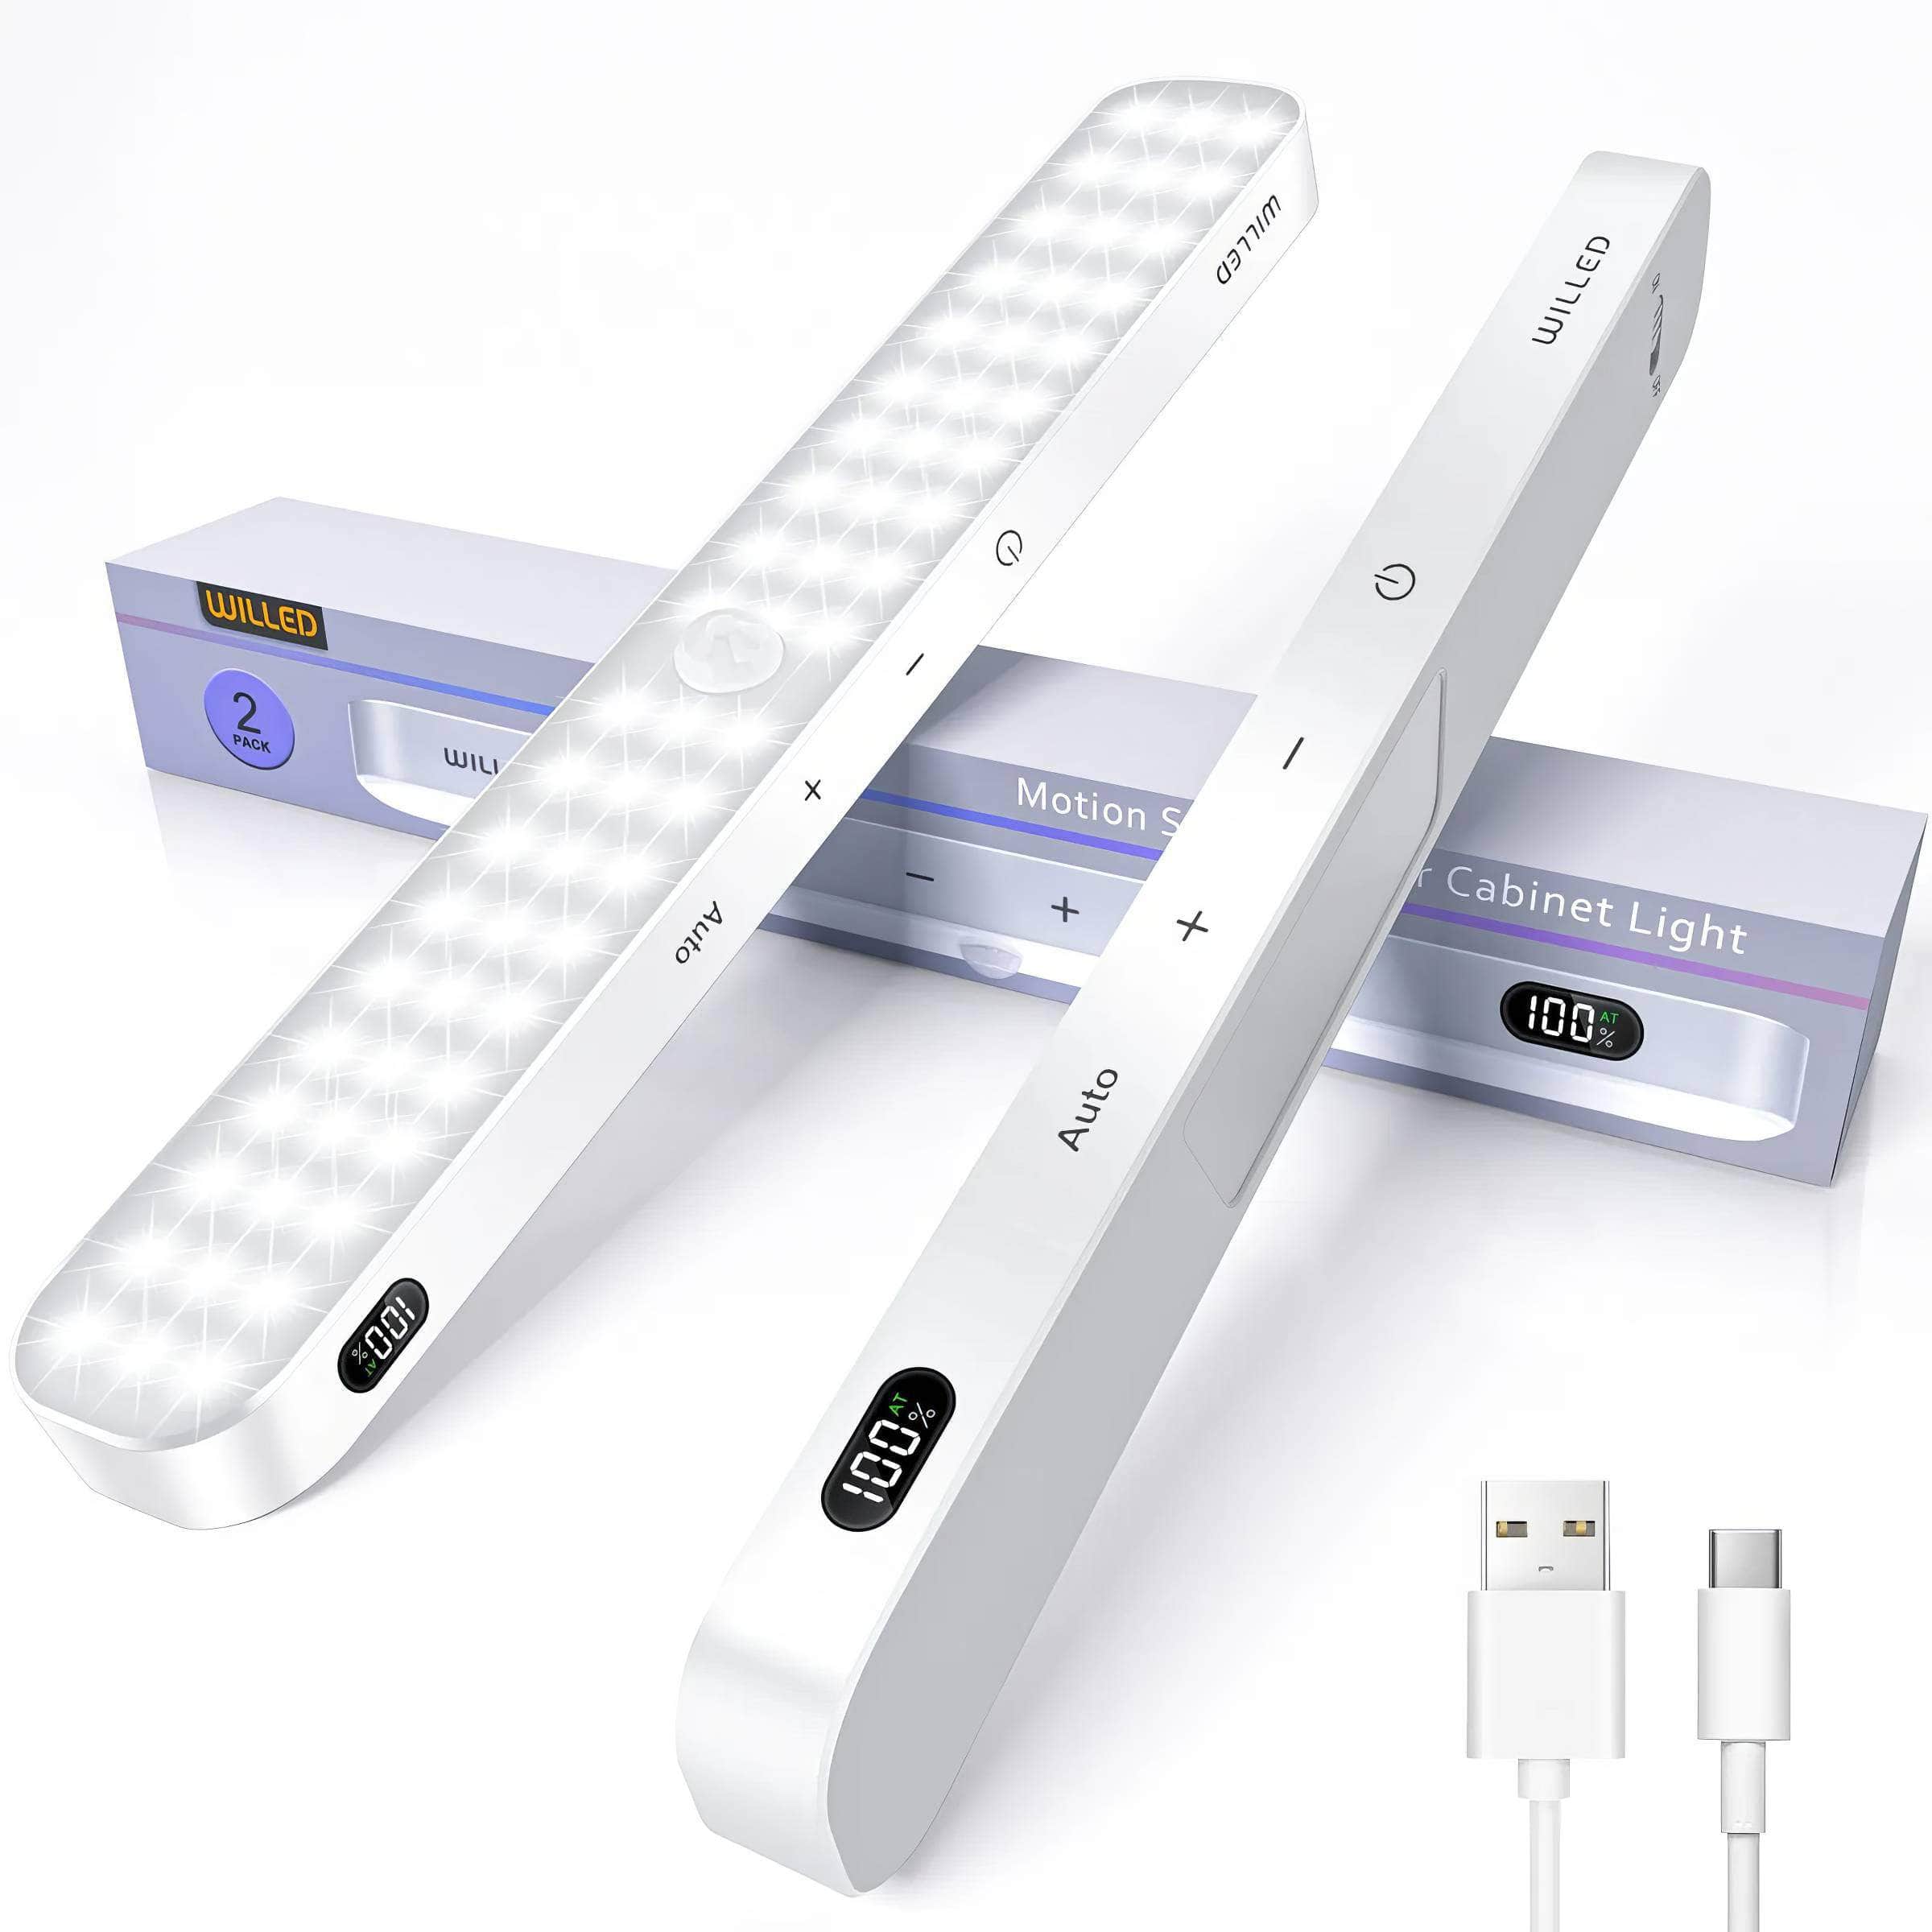 Motion Sensor Cabinet Light - Battery Display, 60 LED Touch Light Bar, Wireless Rechargeable Night Light